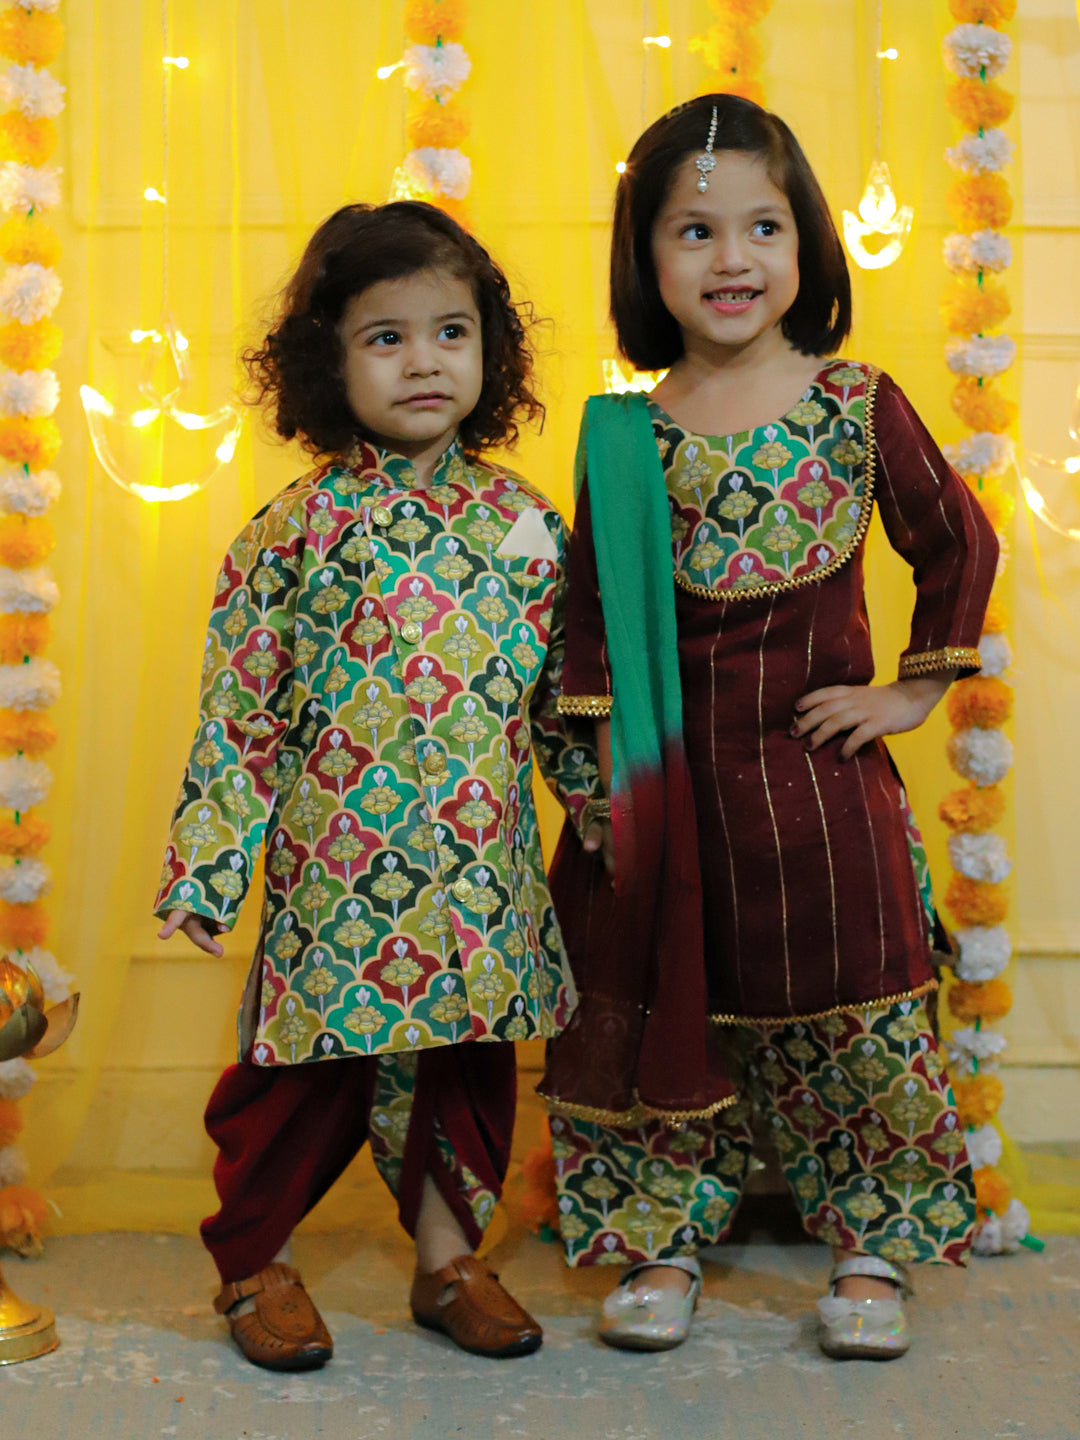 BownBee Printed Full Sleeve Sherwani with Cotton Dhoti and Chanderi Kurta with Printed Salwar and Dupatta for Girls- Maroon